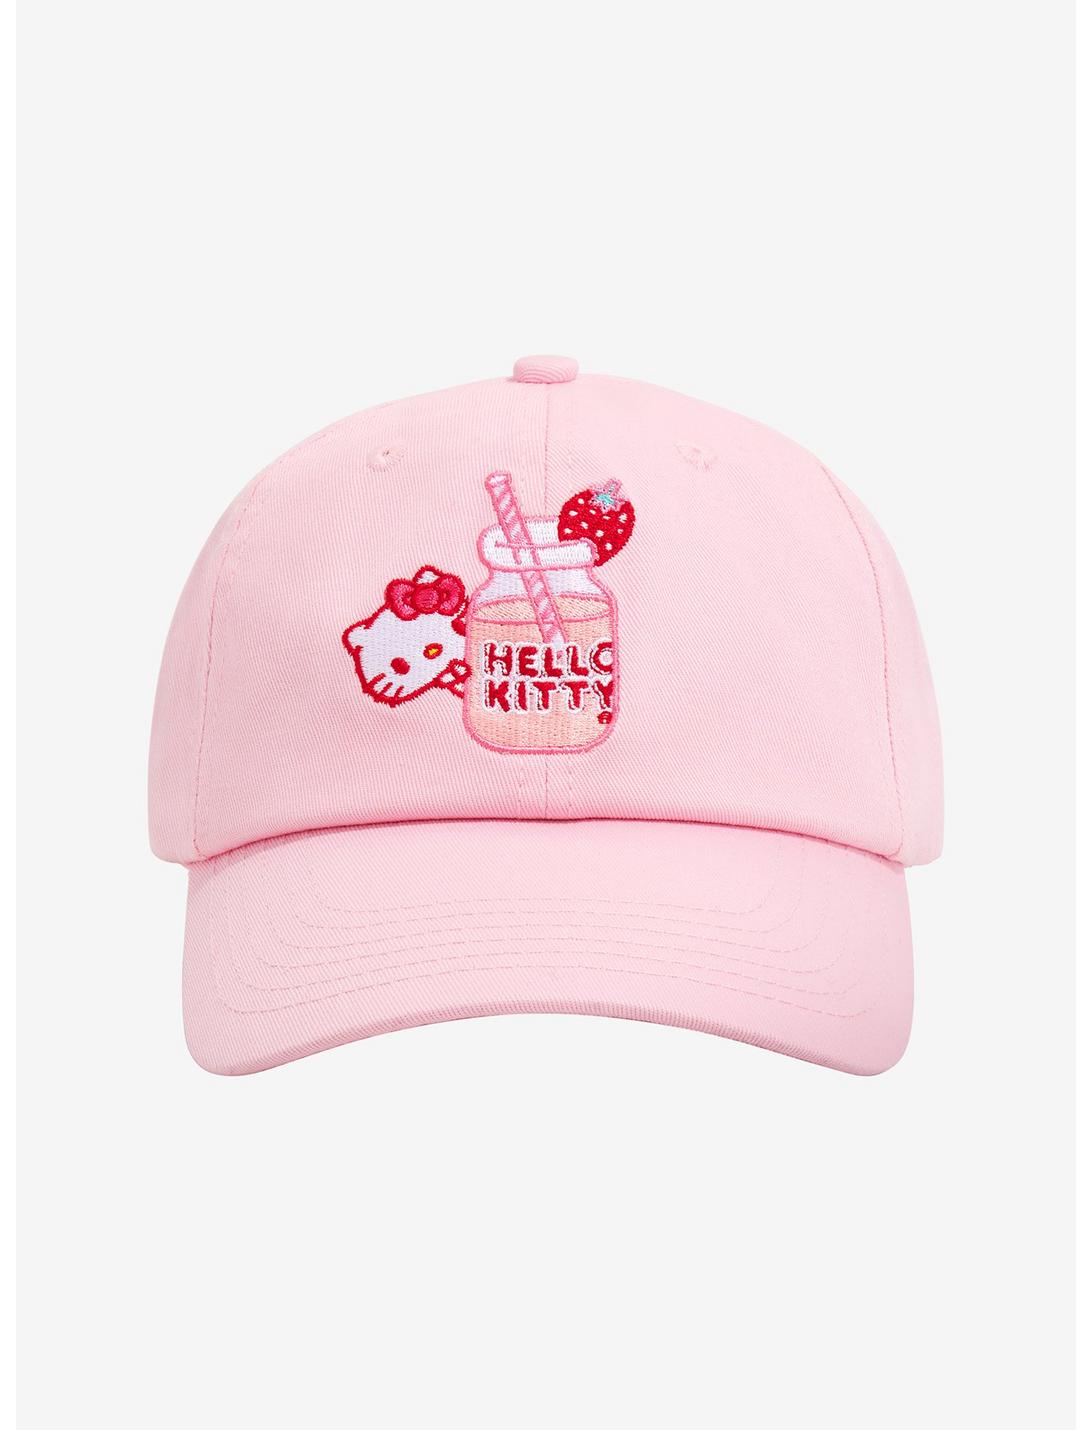 Sanrio Hello Kitty Strawberry Milk Embroidered Cap - BoxLunch Exclusive